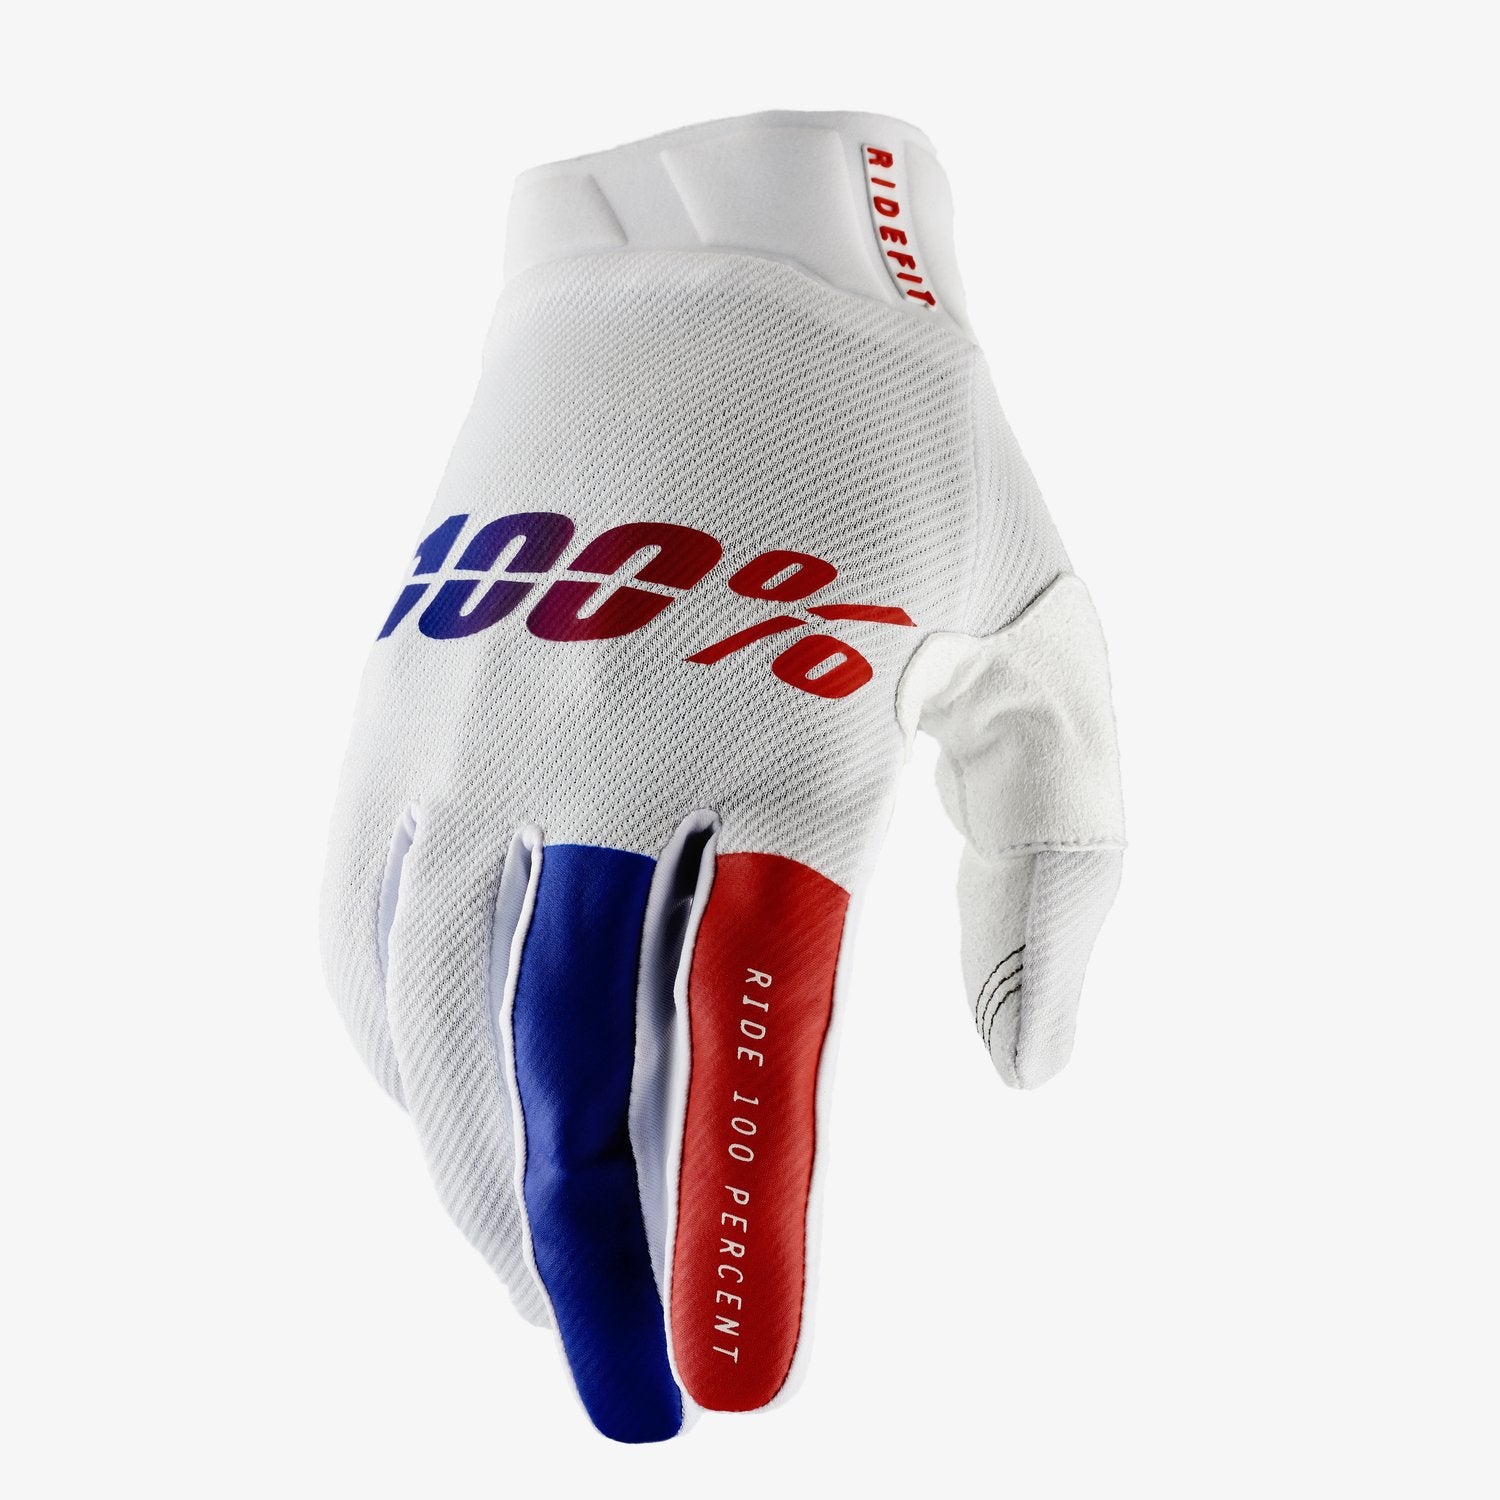 100% - Ridefit Gloves